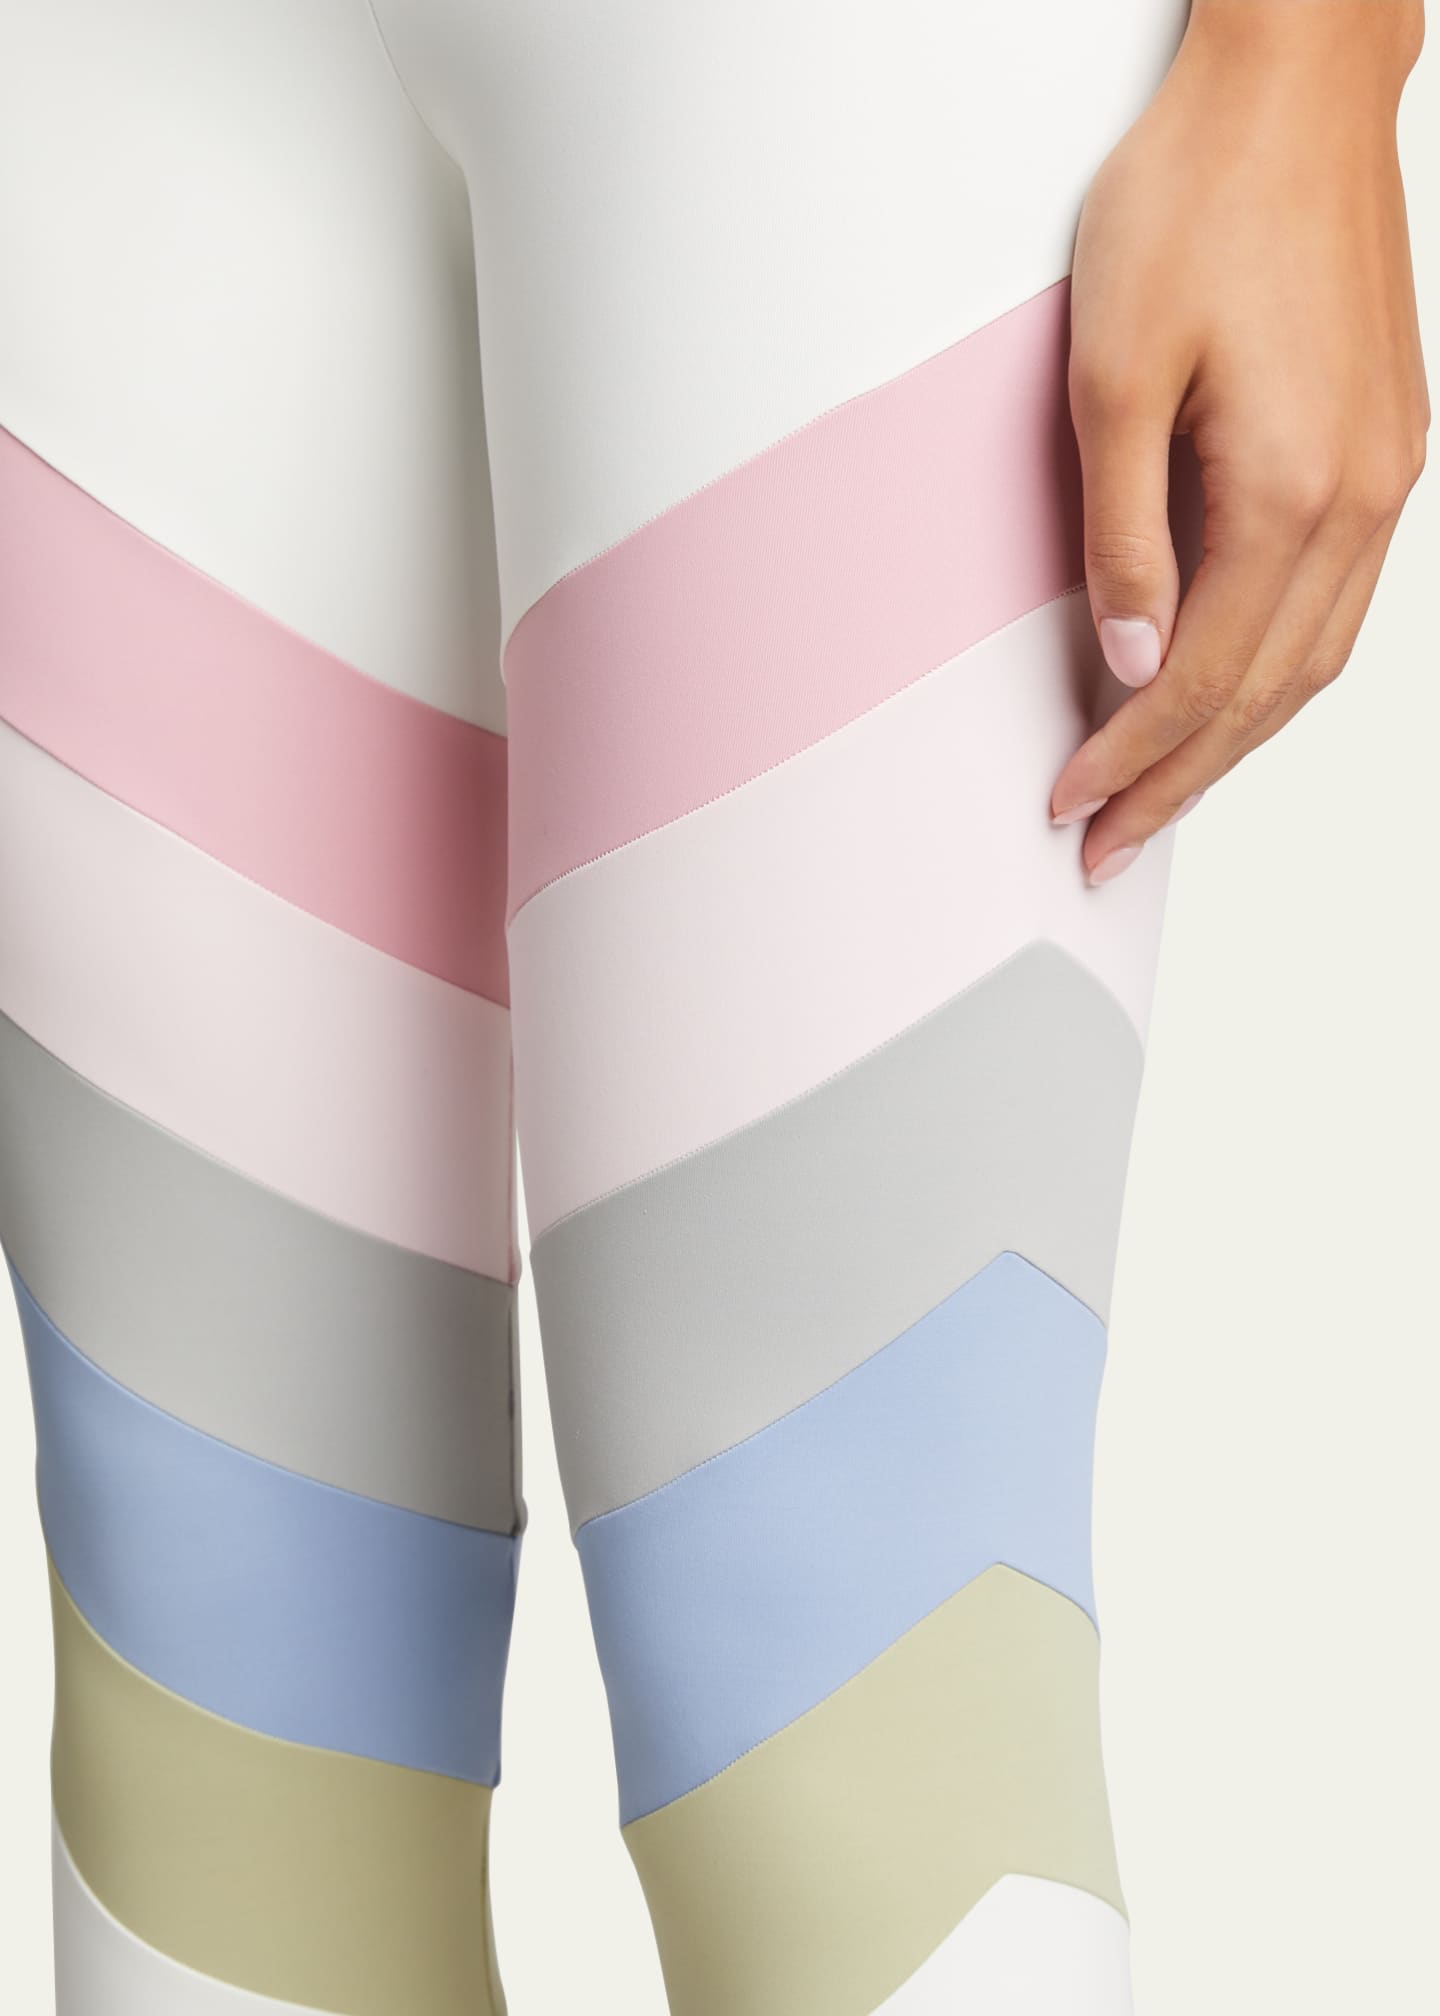 Bright Rainbow Tights, Ombre Print Women's Designer Casual Leggings- Made  in USA/EU